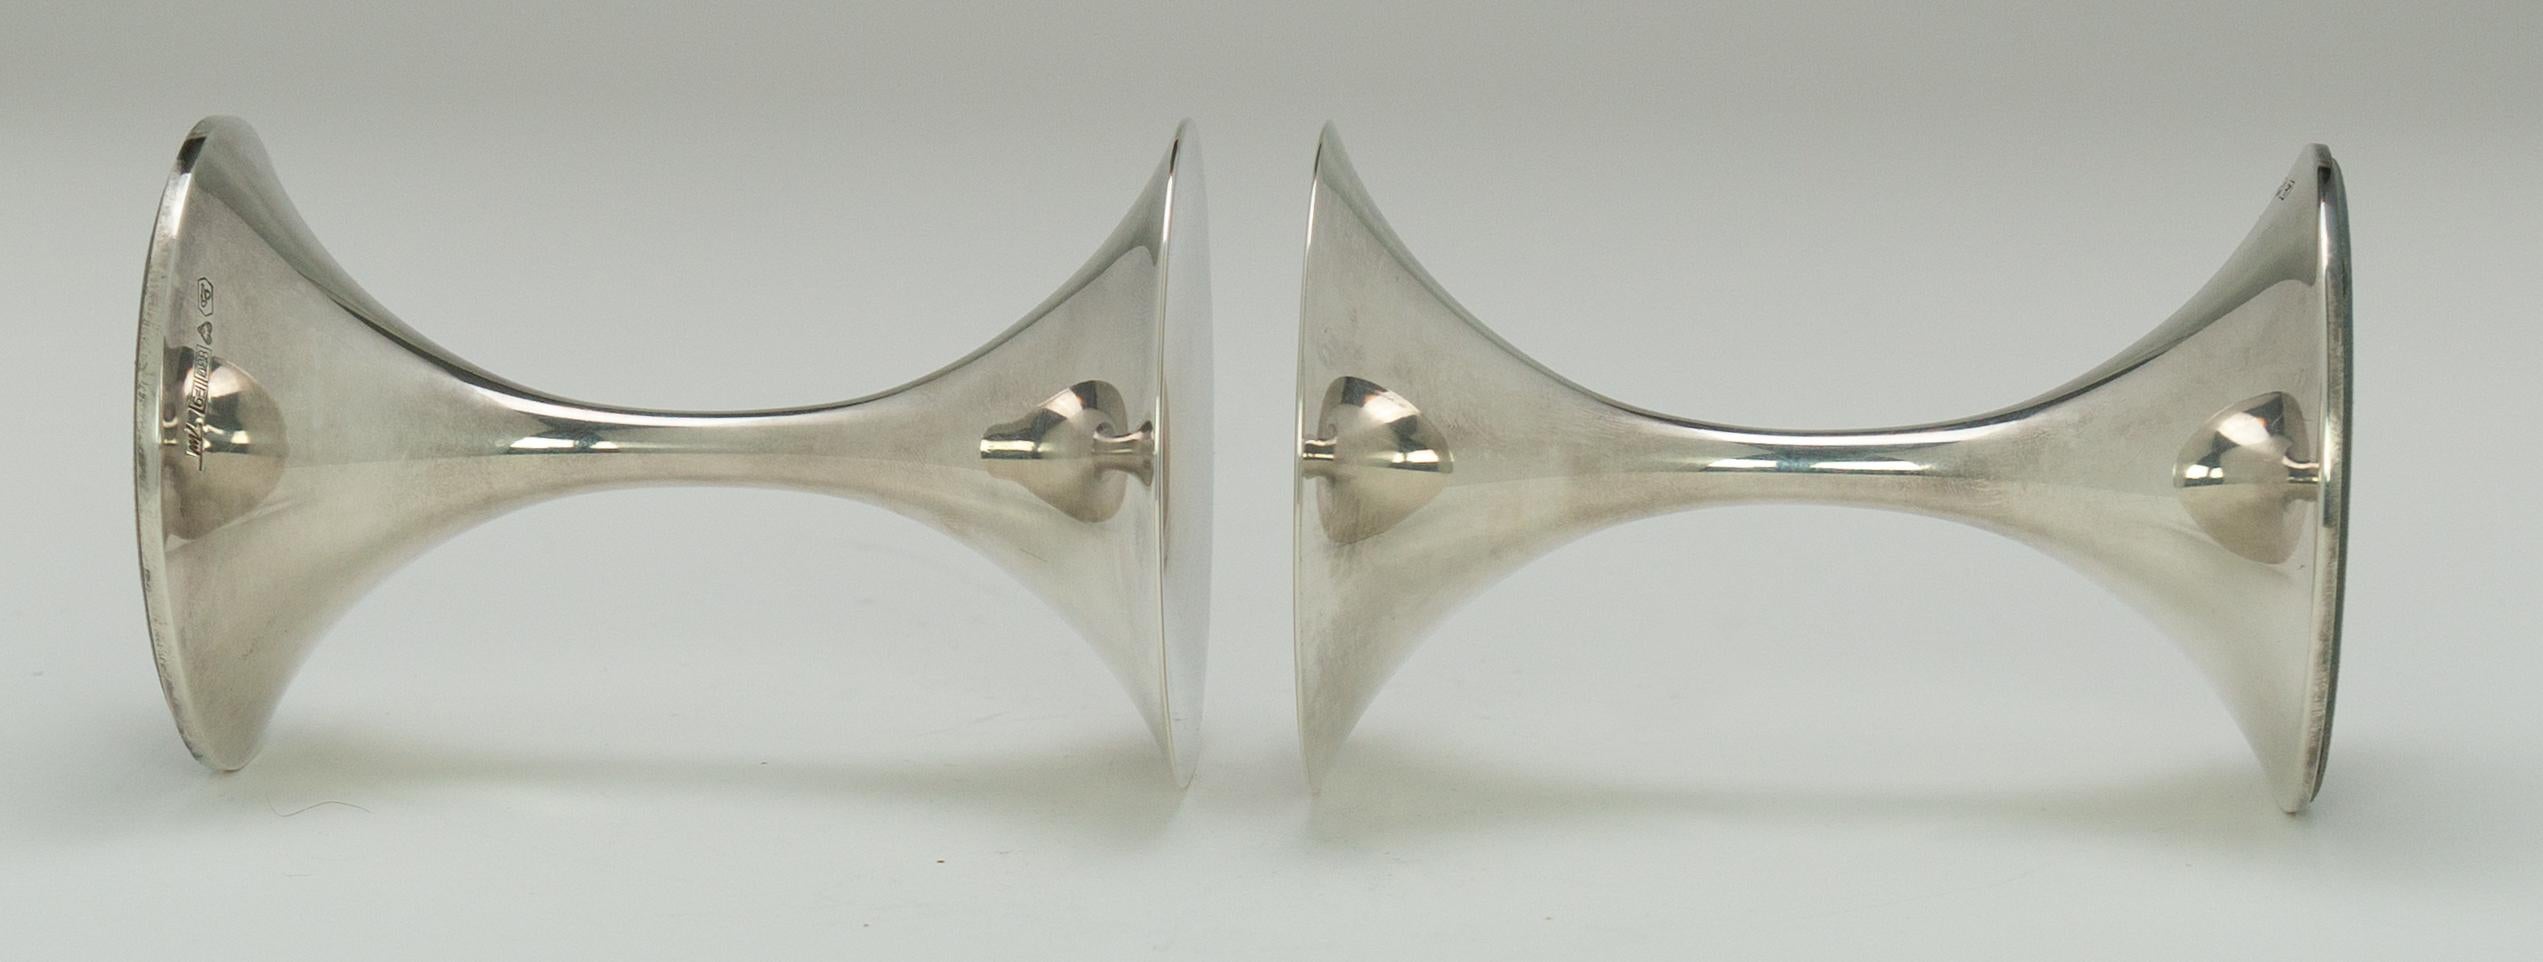 Women's or Men's Pair of Silver “Trumpetti” Candlesticks Model TW 284, Designed by Tapio Wirkkala